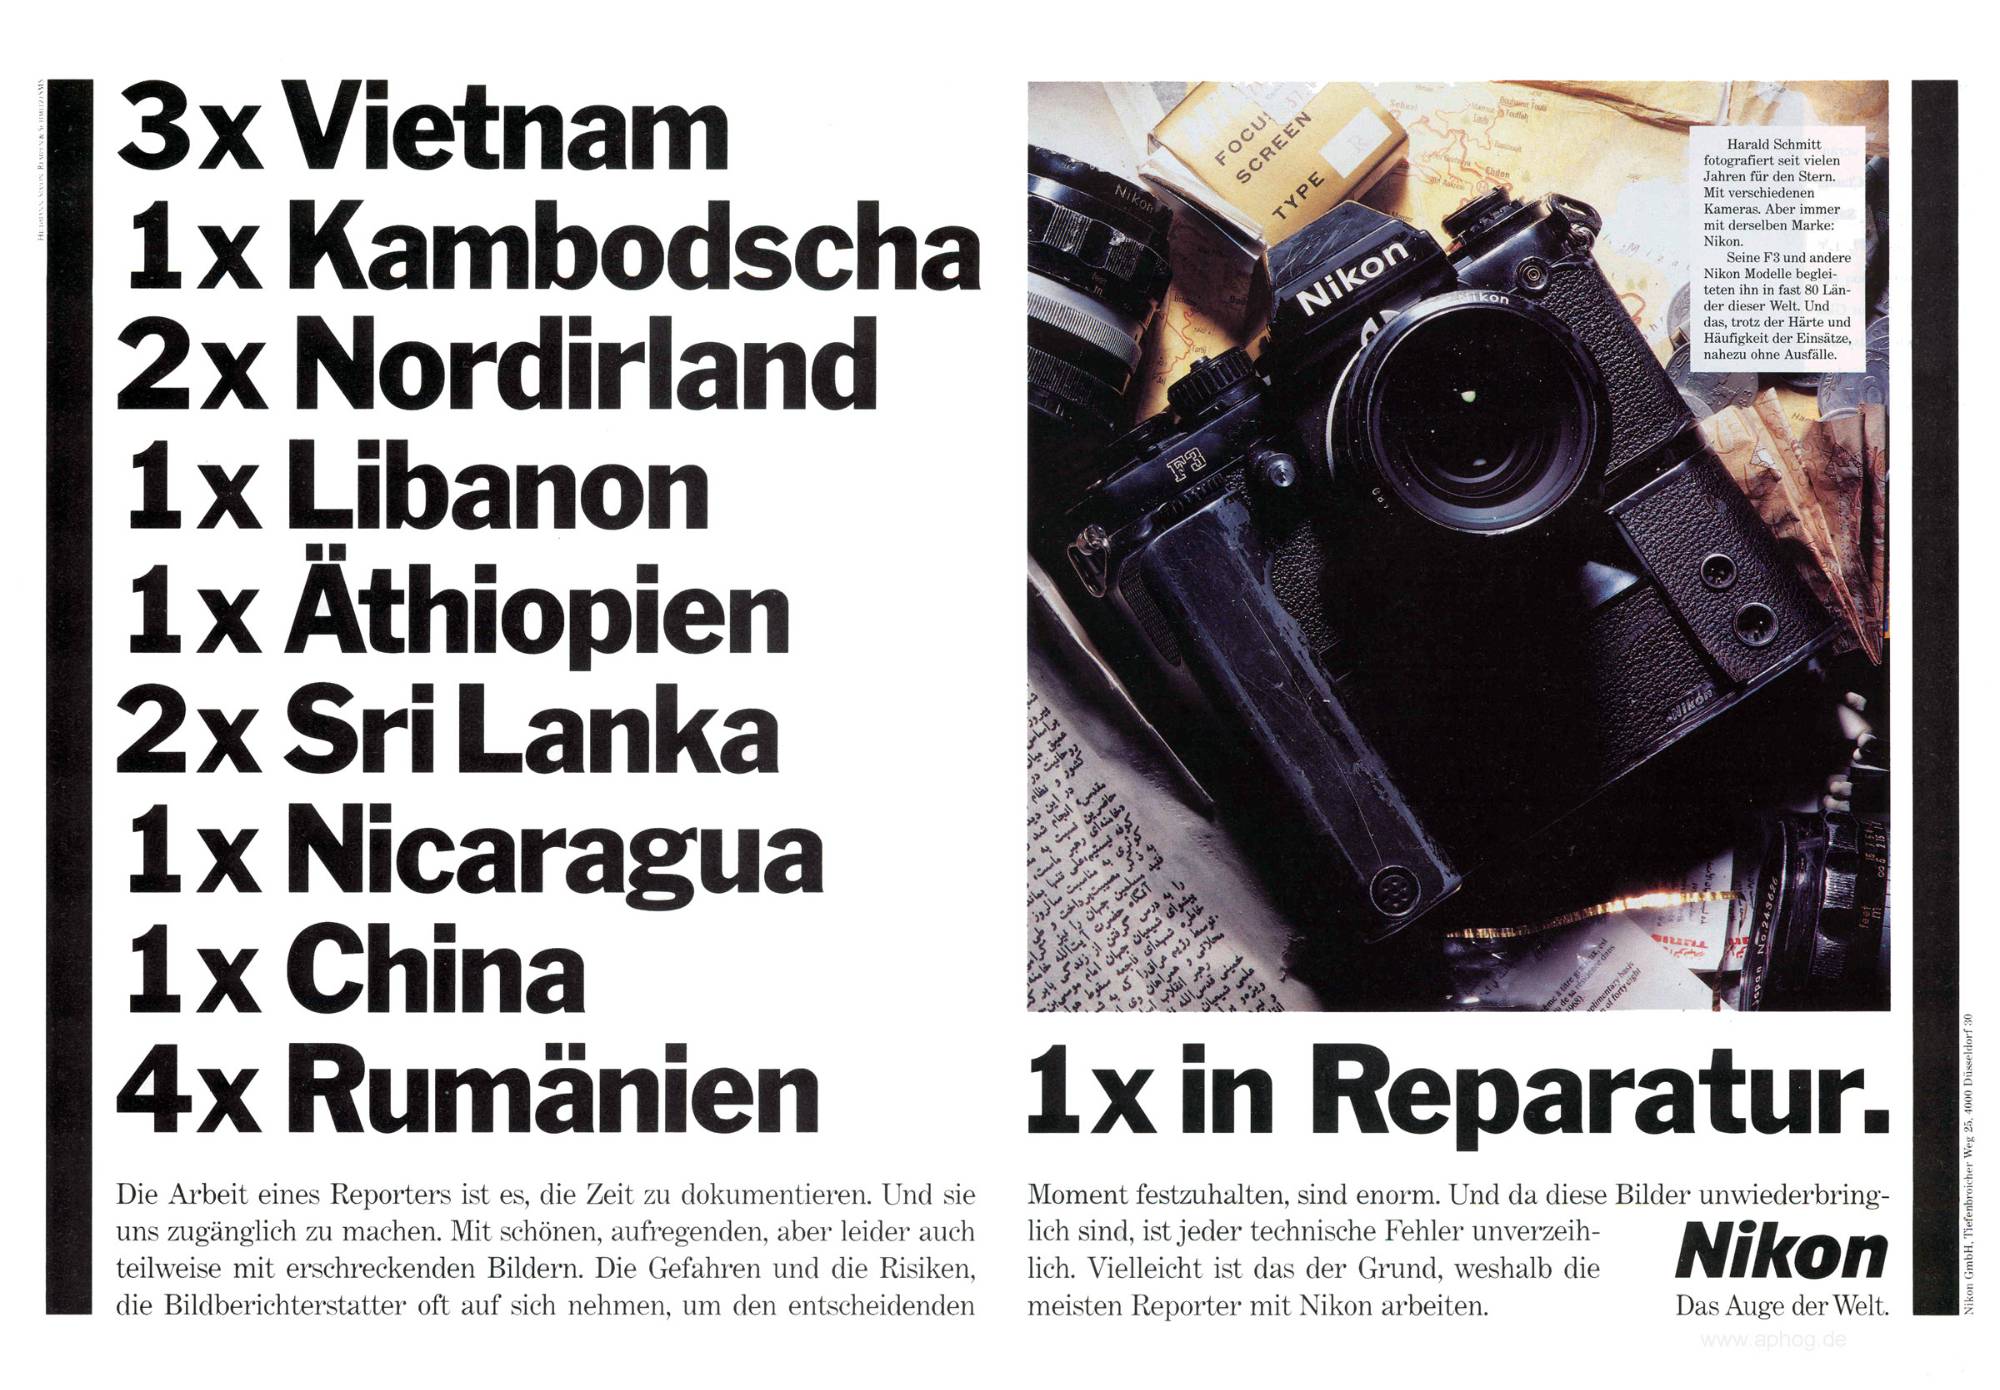 Anzeige Nikon F3 Vietnam 1x Reparatur